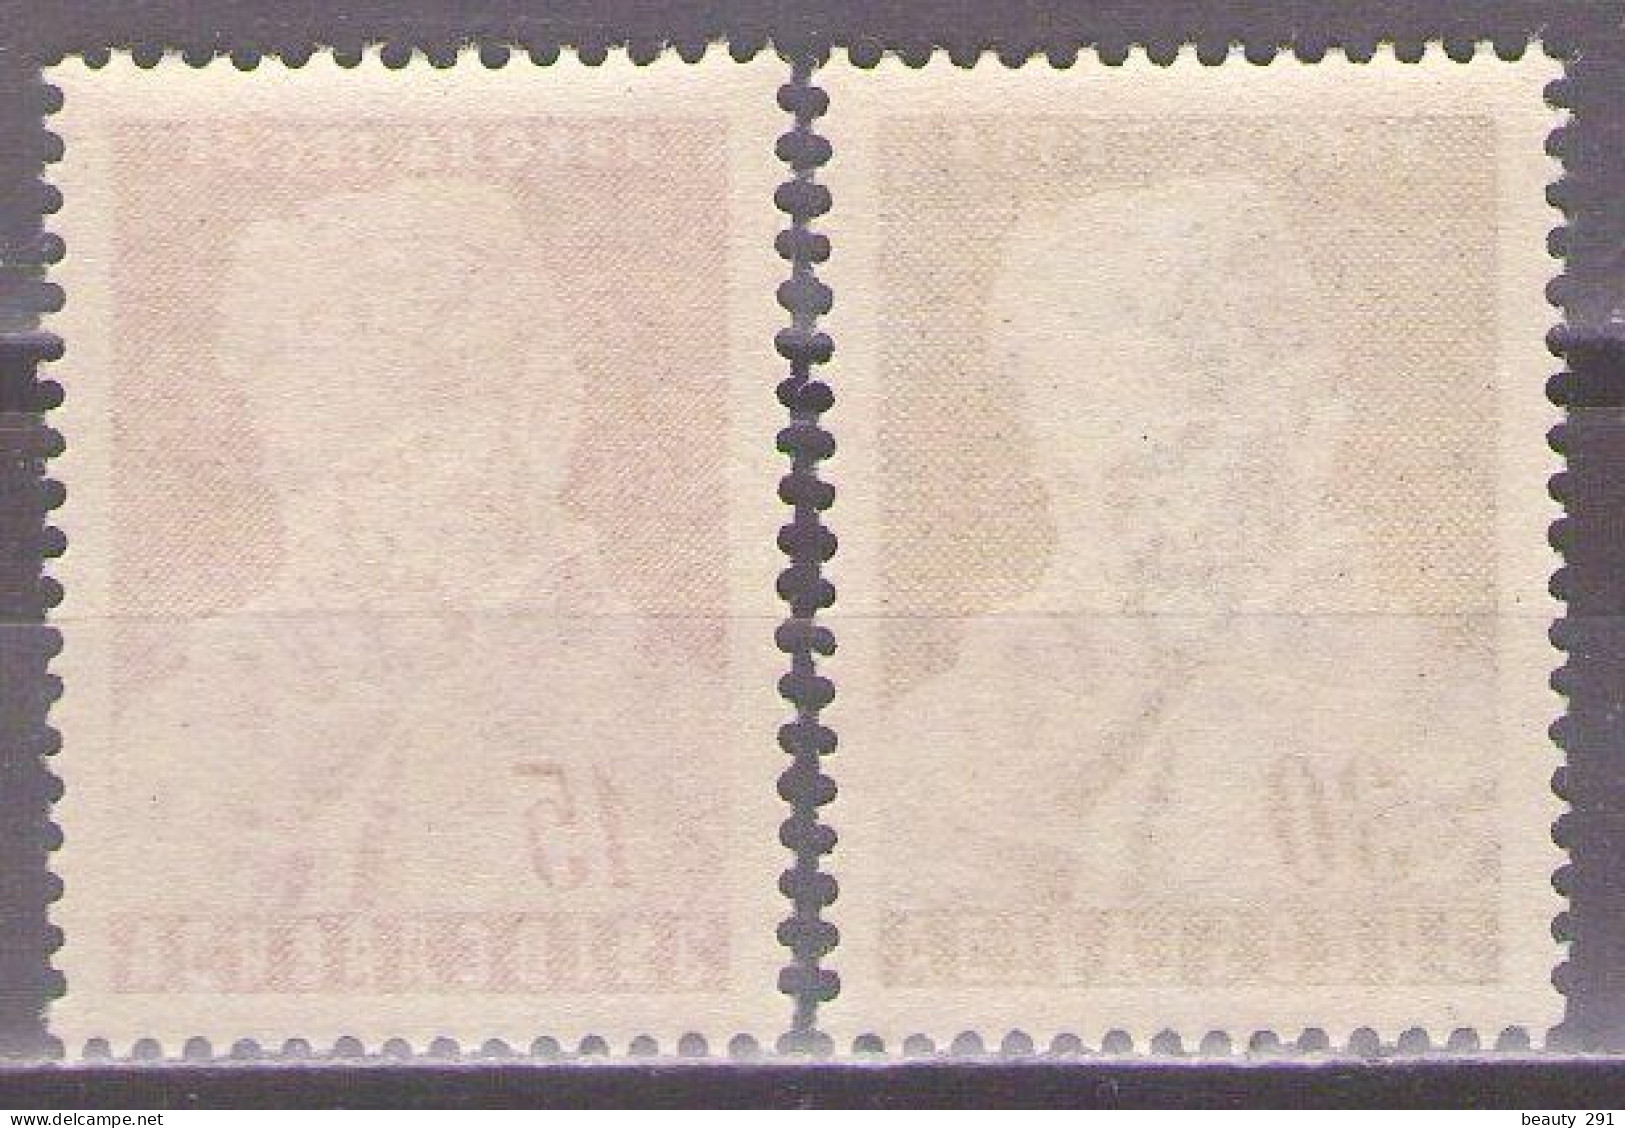 Yugoslavia 1953 - Nikola Tesla - Mi 712-713 - MNH**VF - Unused Stamps